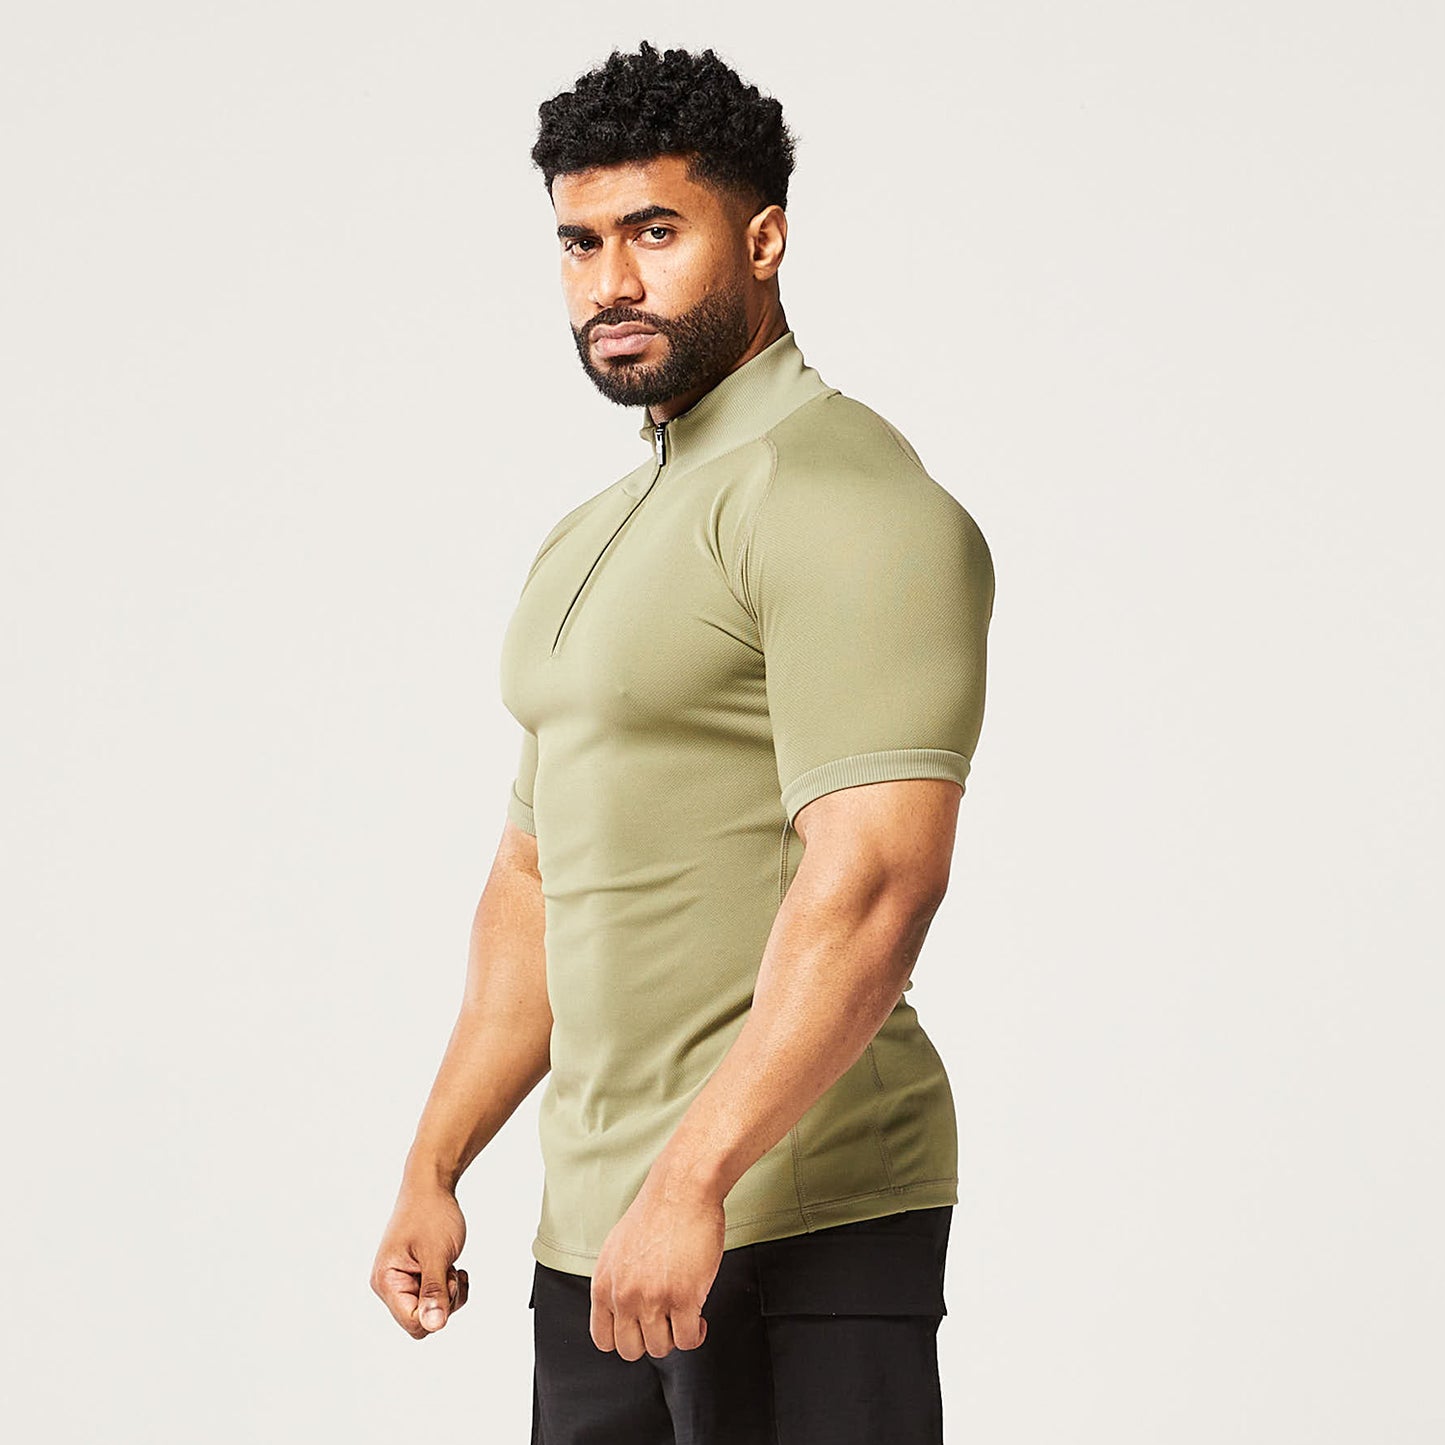 squatwolf-gym-wear-code-zip-up-tee-green-workout-shirts-for-men